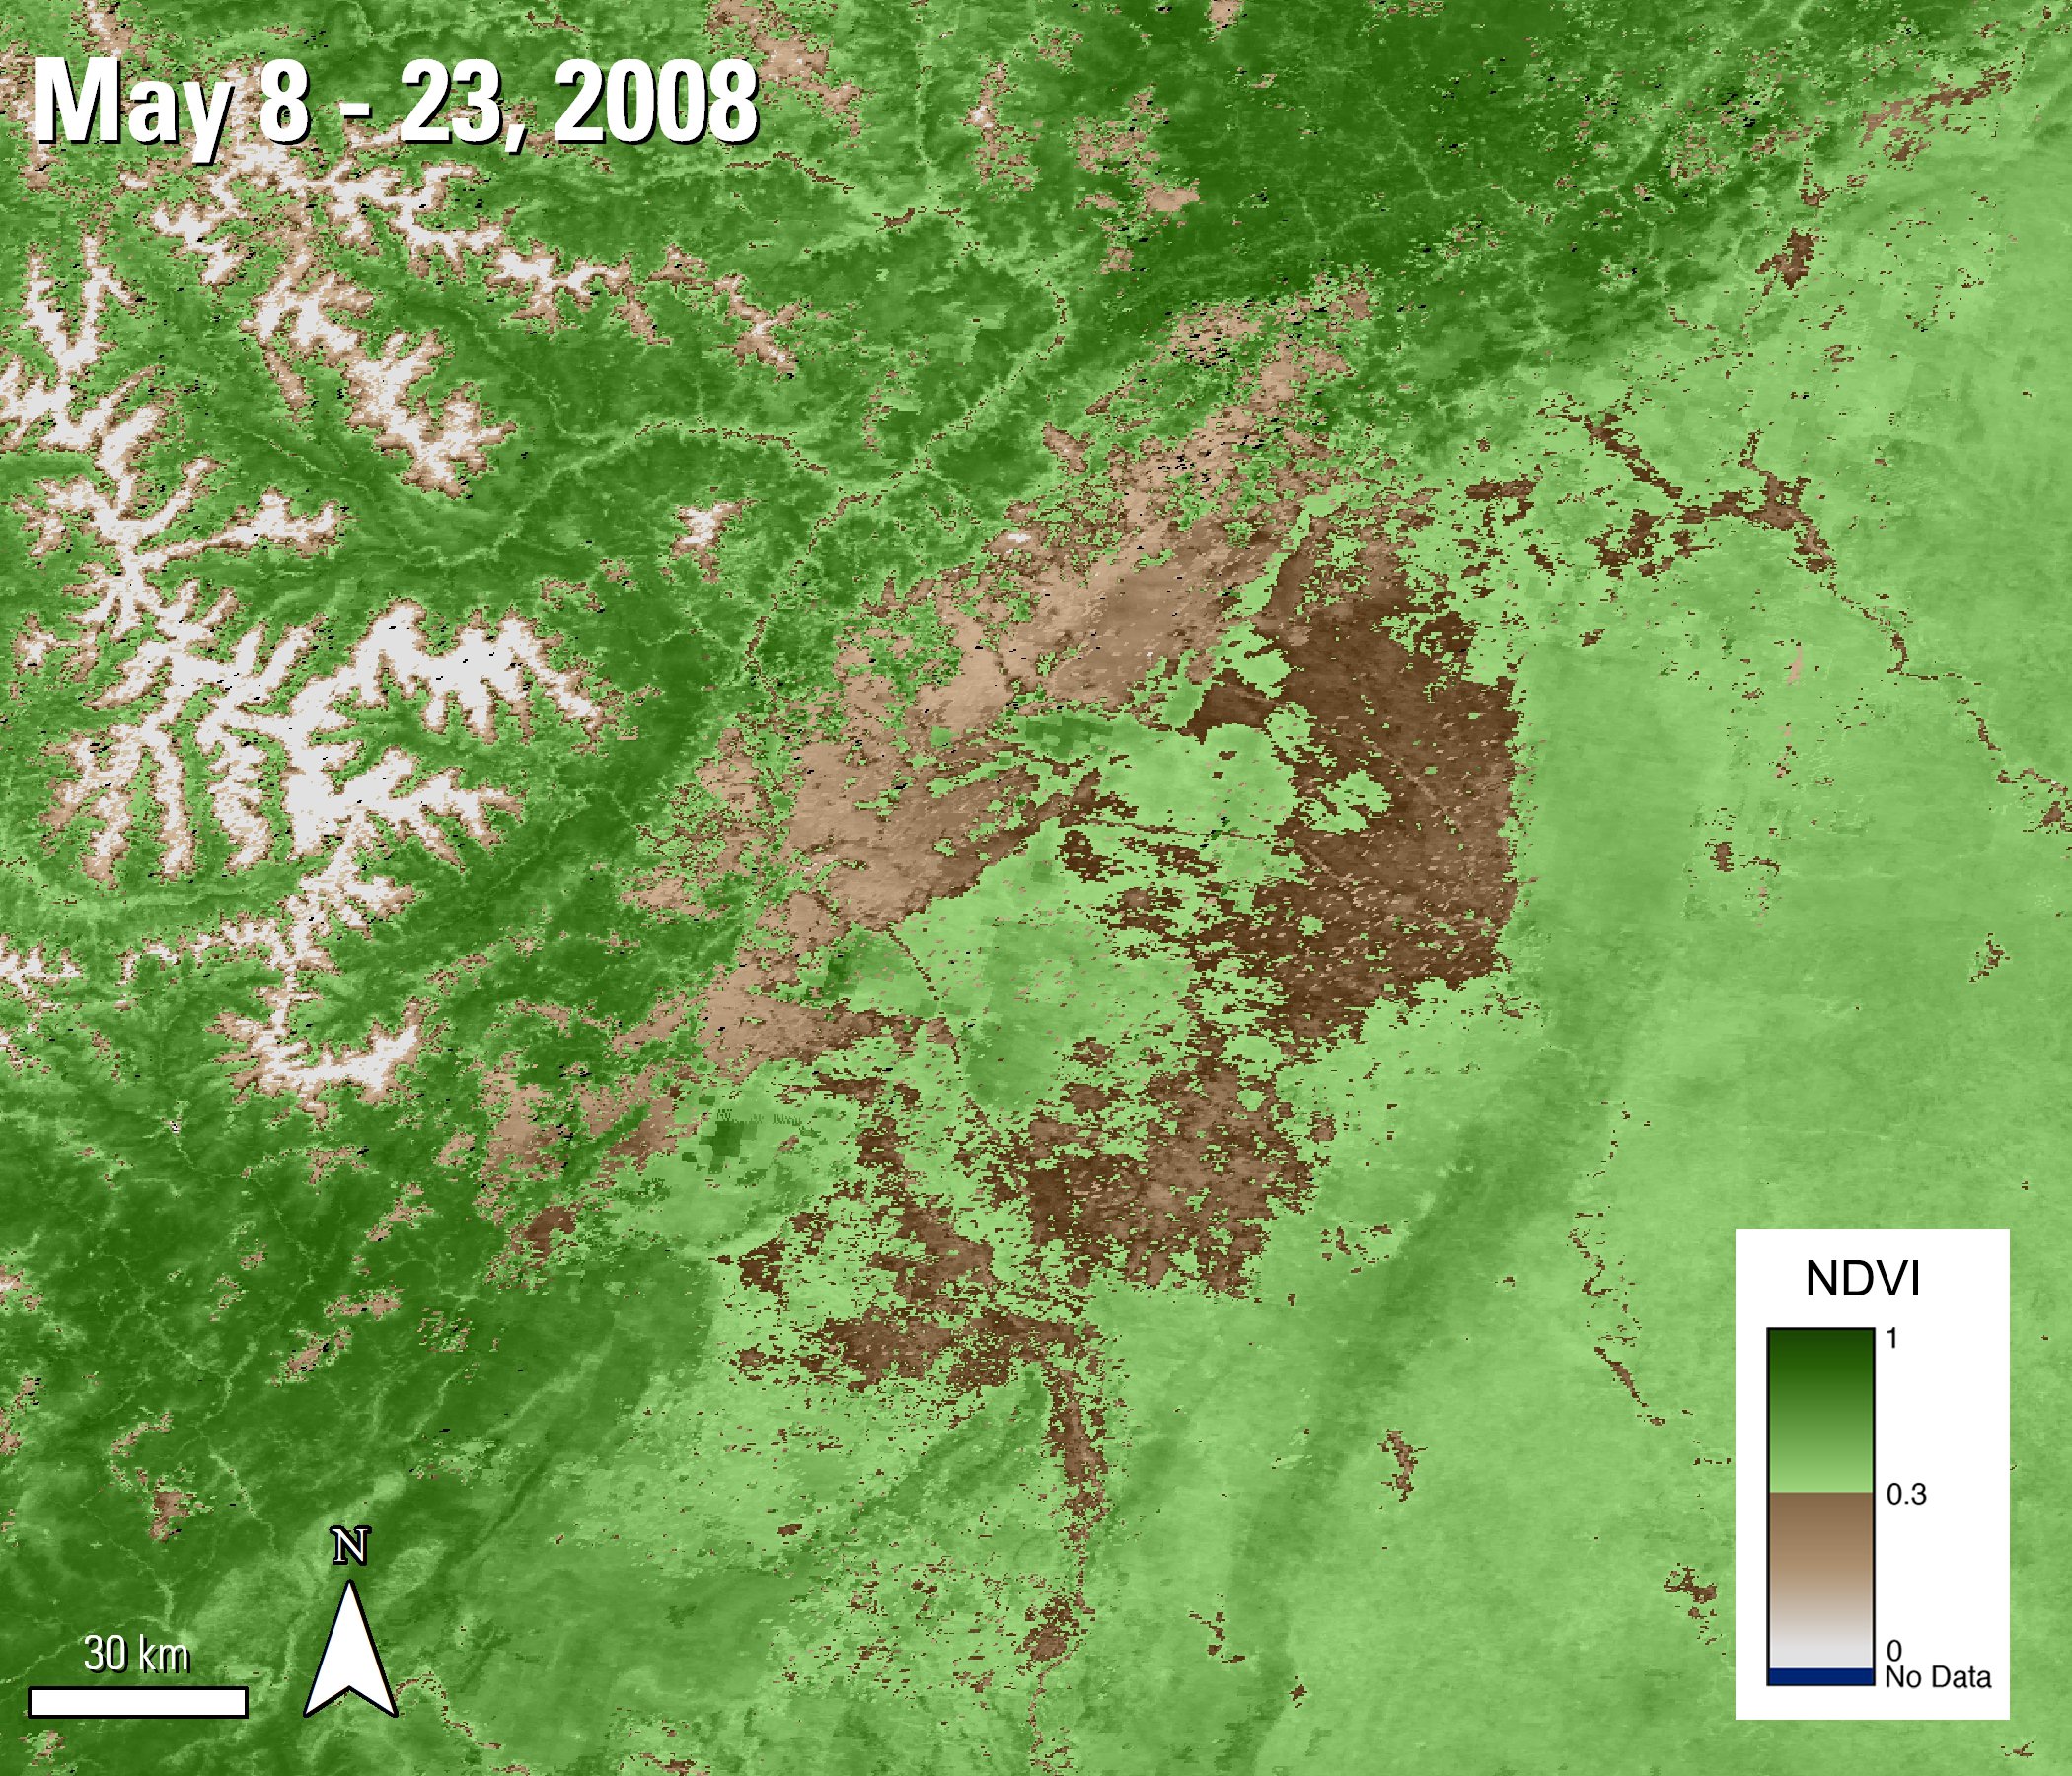 Terra MODIS NDVI data over Yunus' study area.